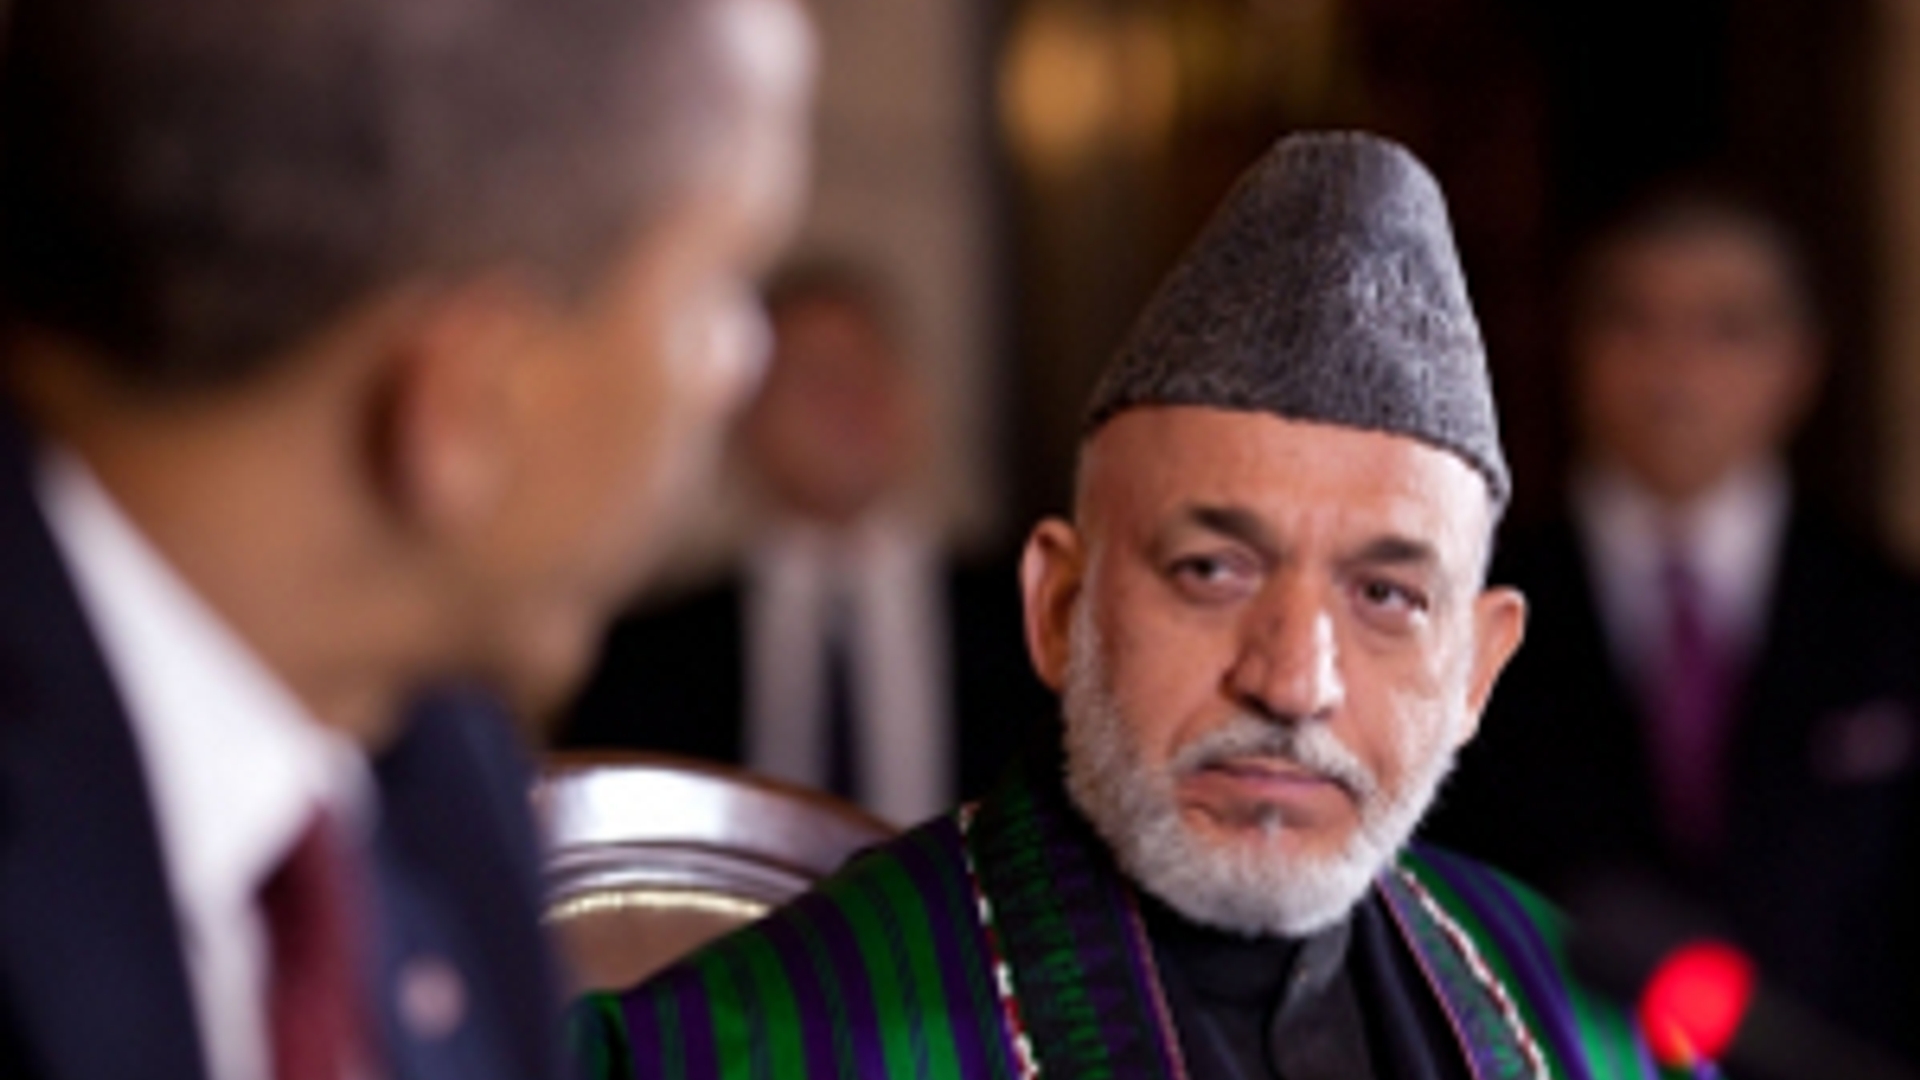 Flickr_Obama_Karzai_CharlesMcCain_300